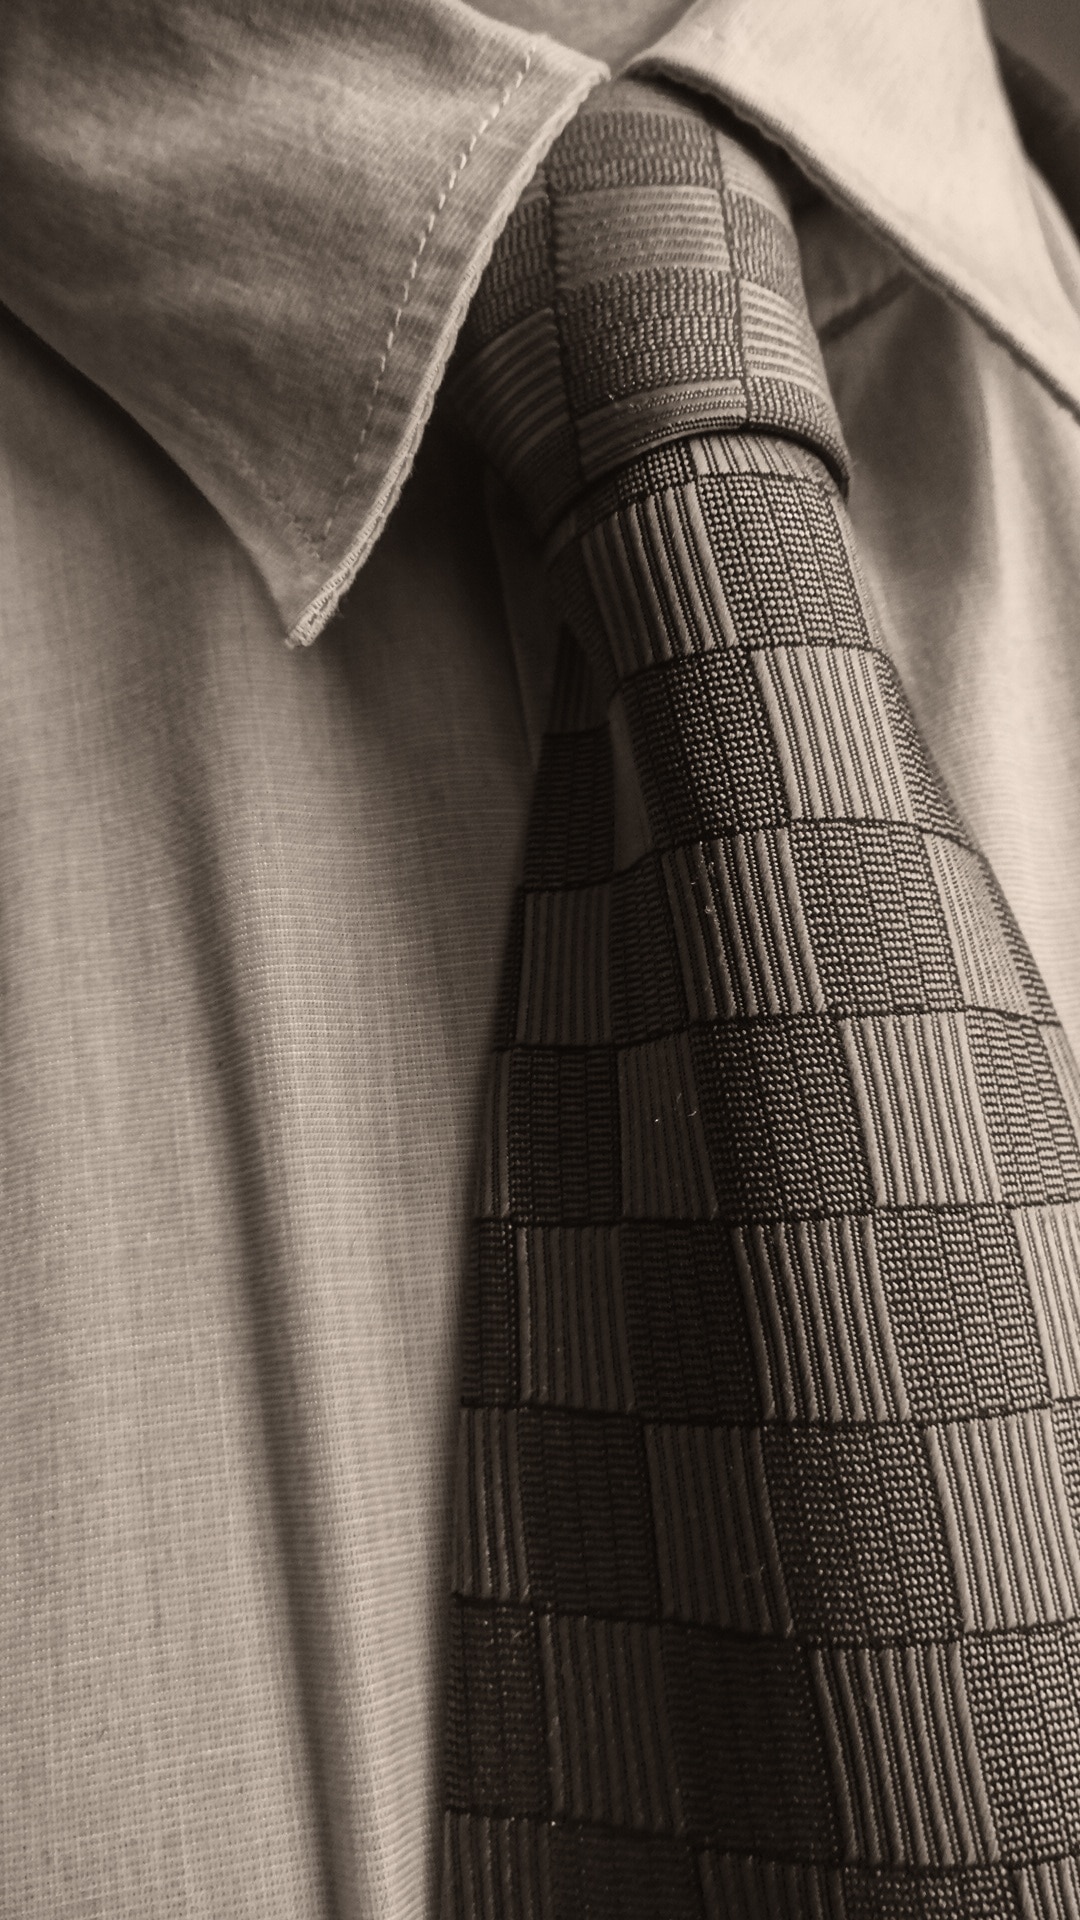 grey dress shirt and neck tie